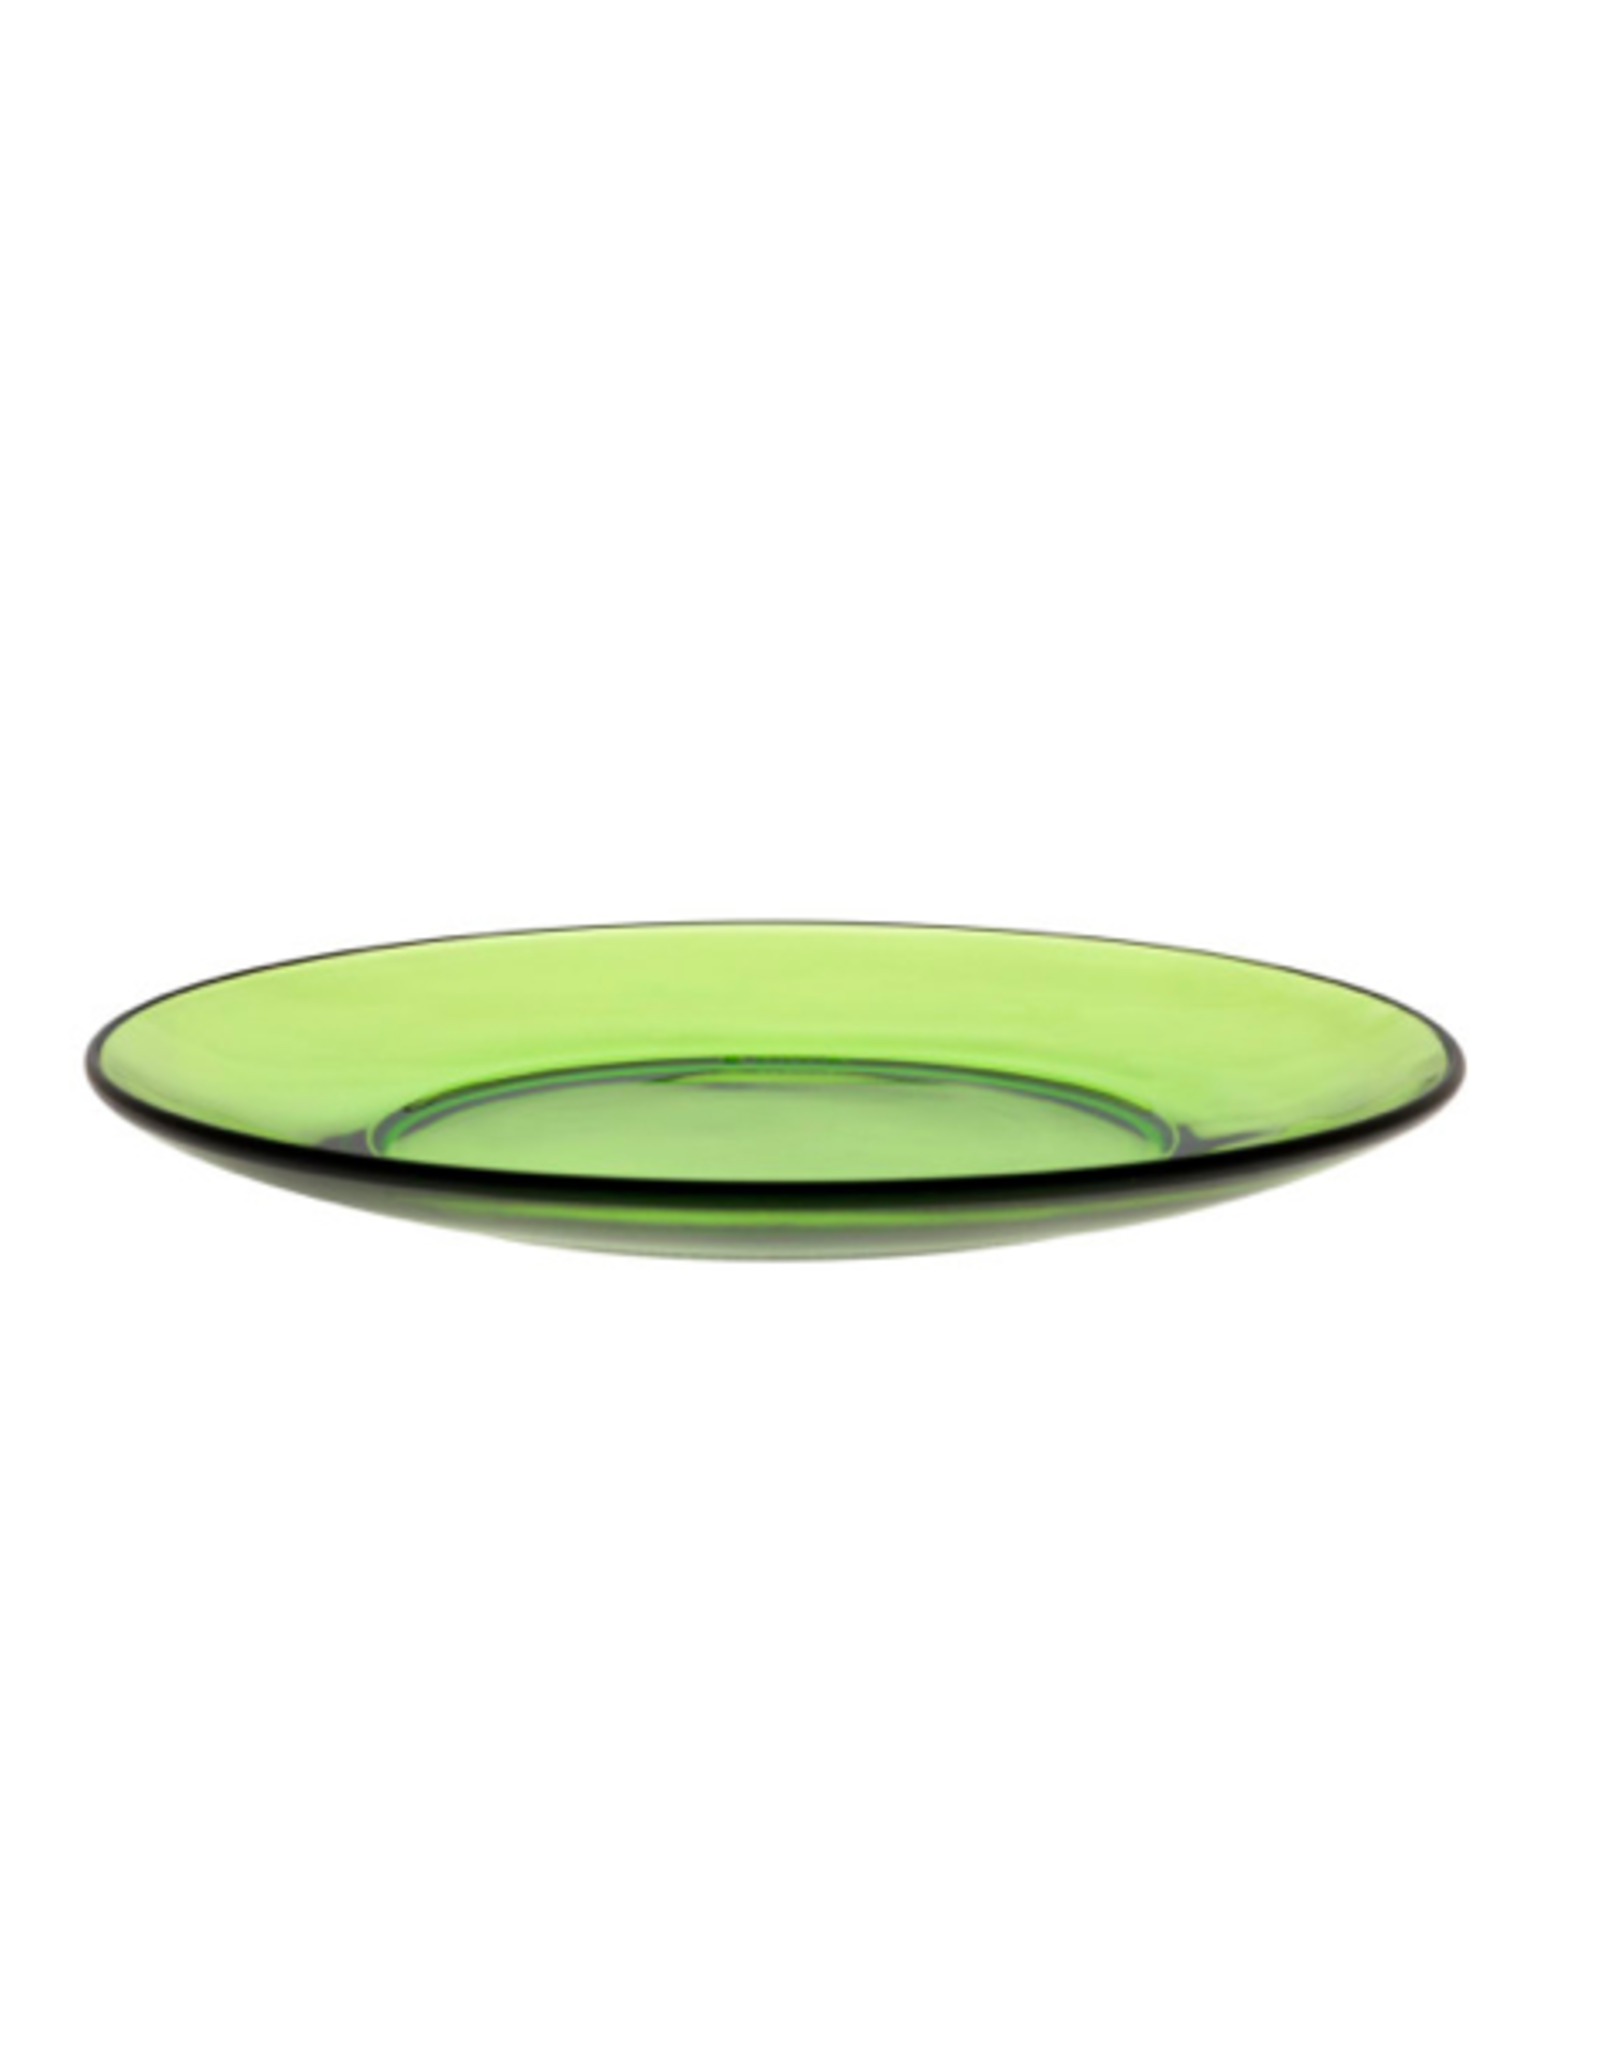 ICM - Duralex Glass Plate / Lys, Green, 7.5"